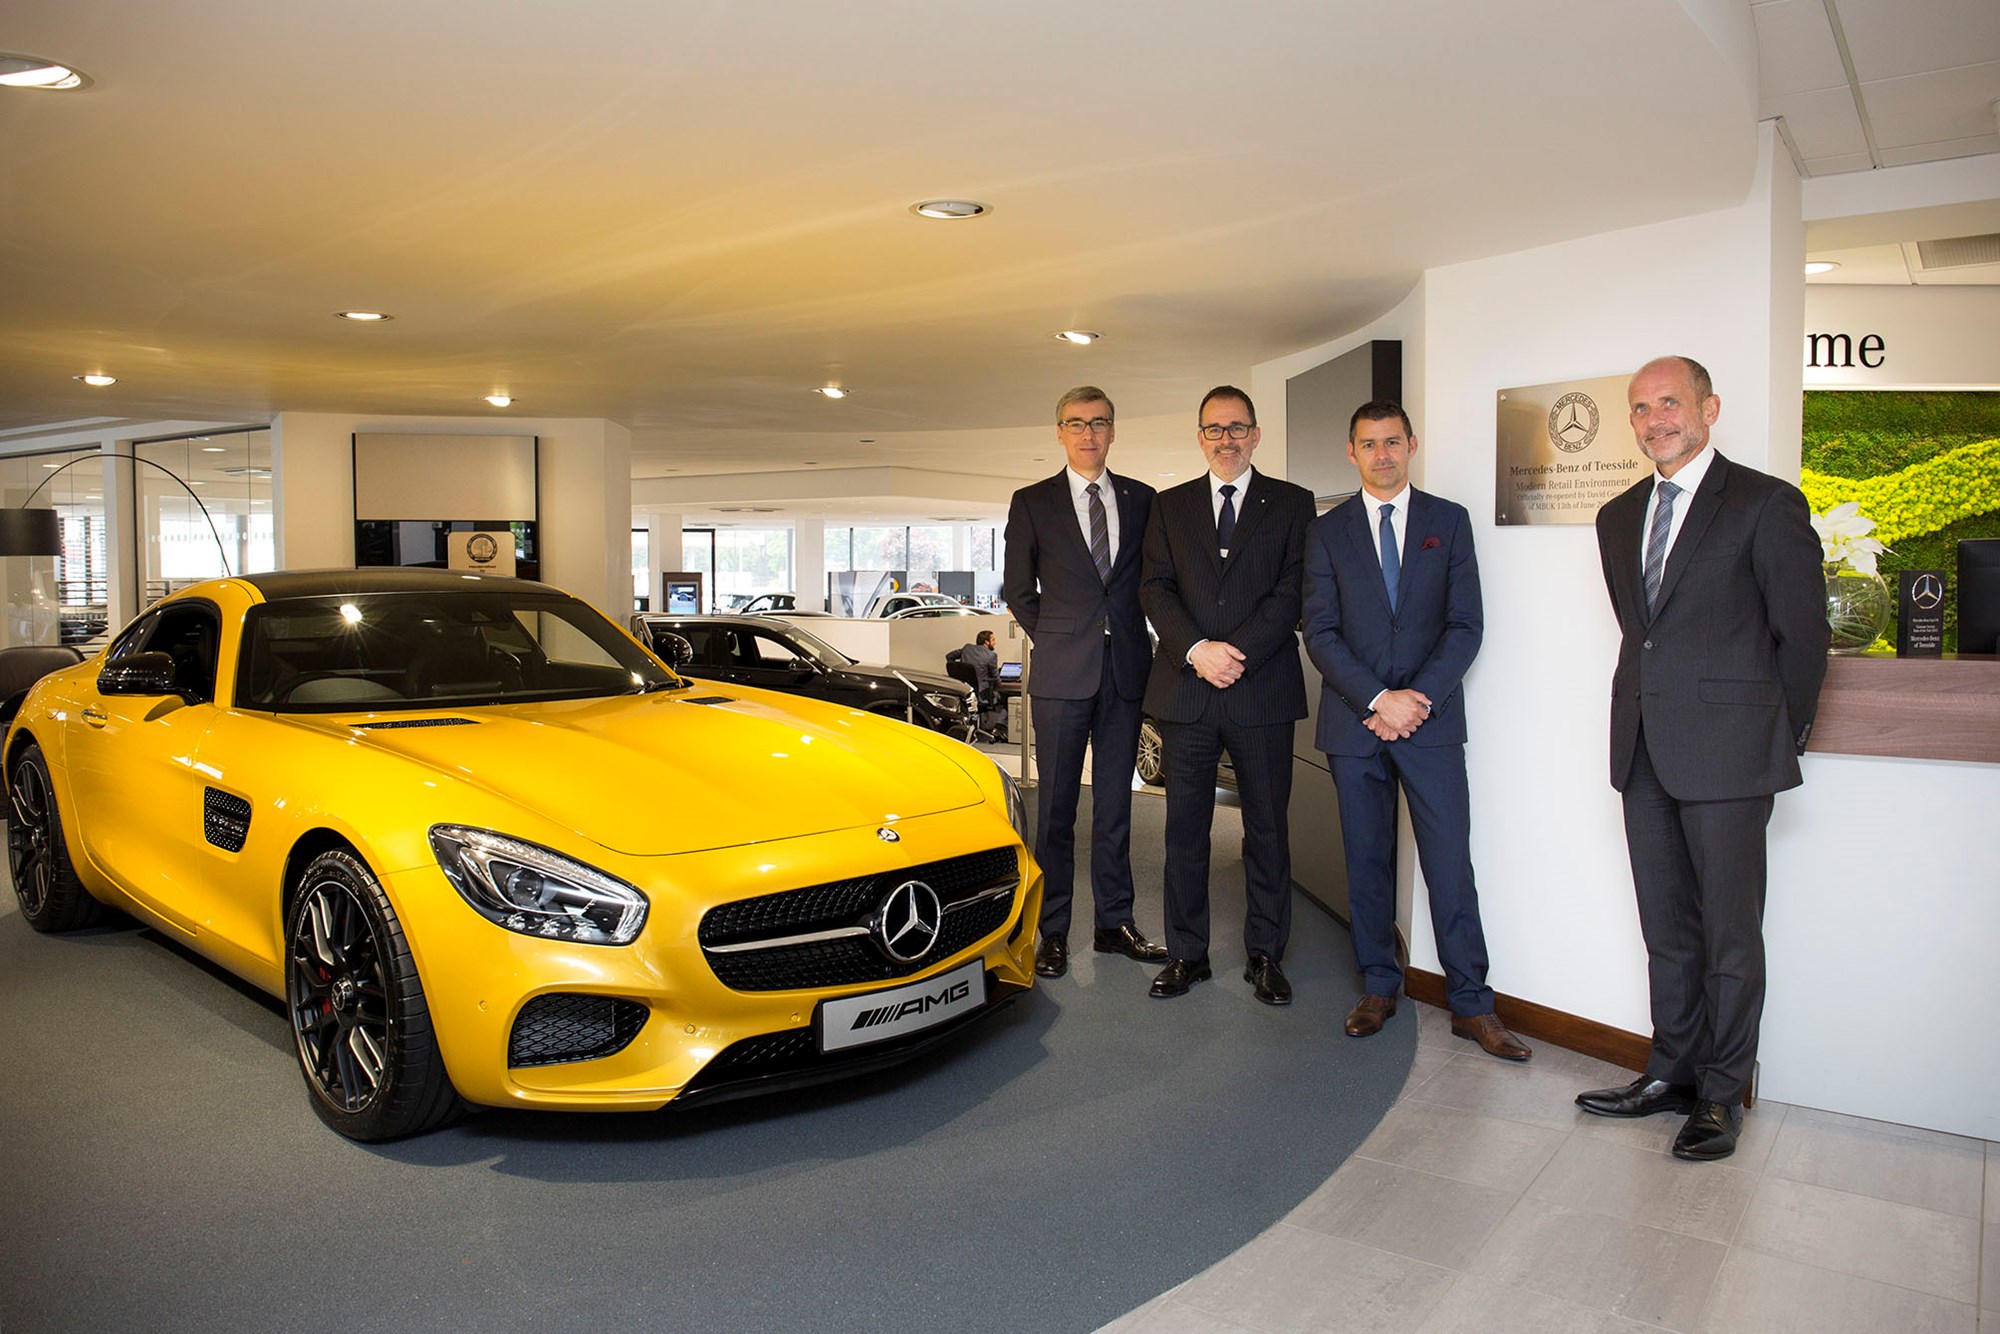 Sytner Group S 1 Million Teesside Mercedes Redevelopment Revealed Car Dealer News